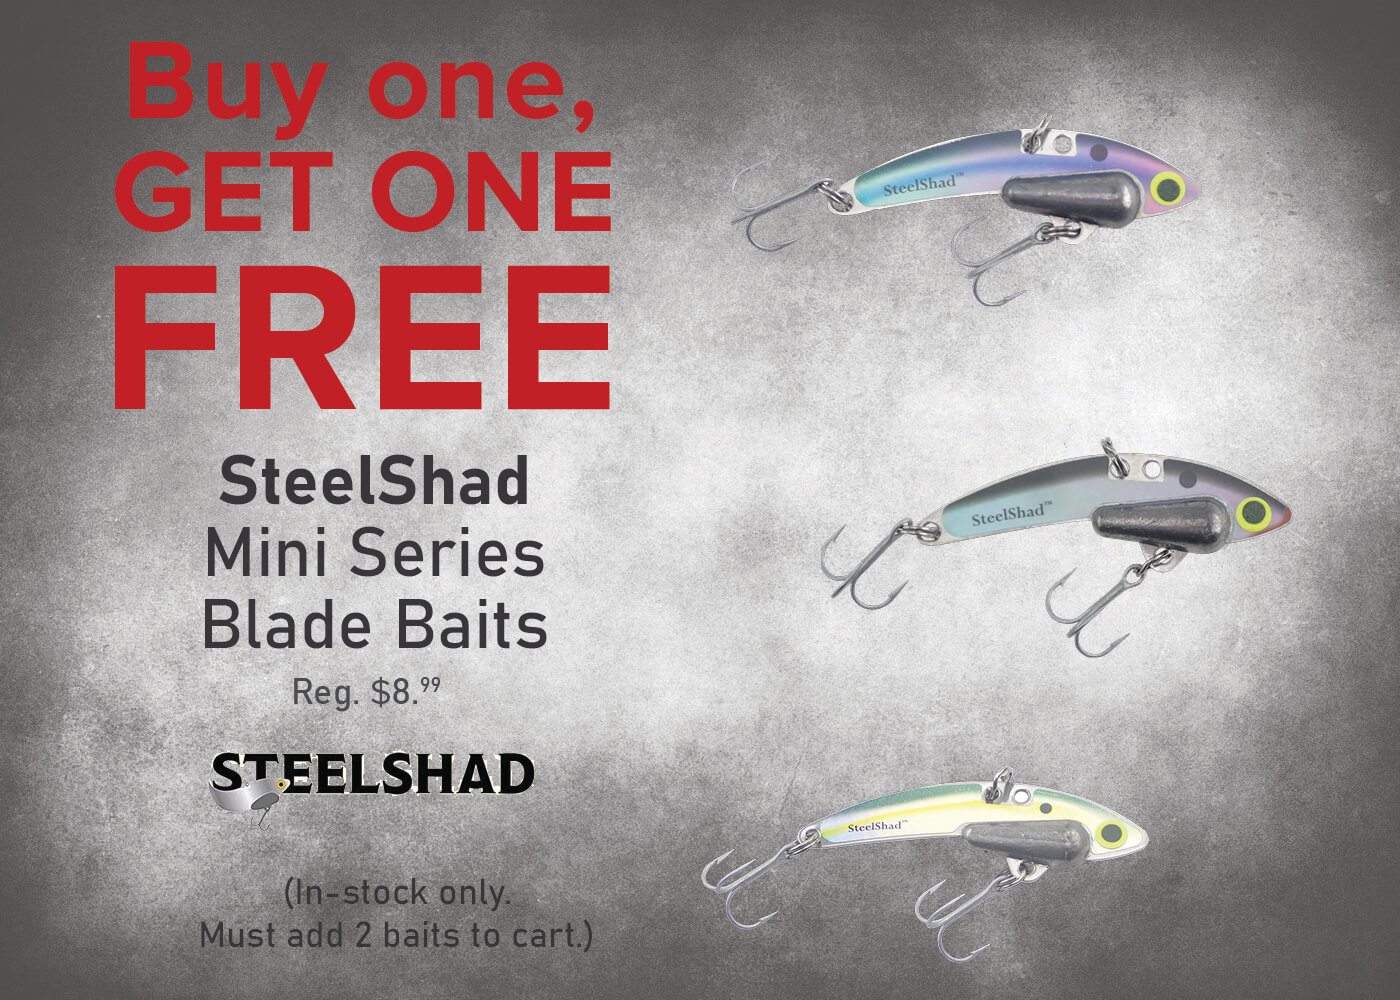 Buy 1, Get 1 FREE SteelShad Mini Series Blade Baits!